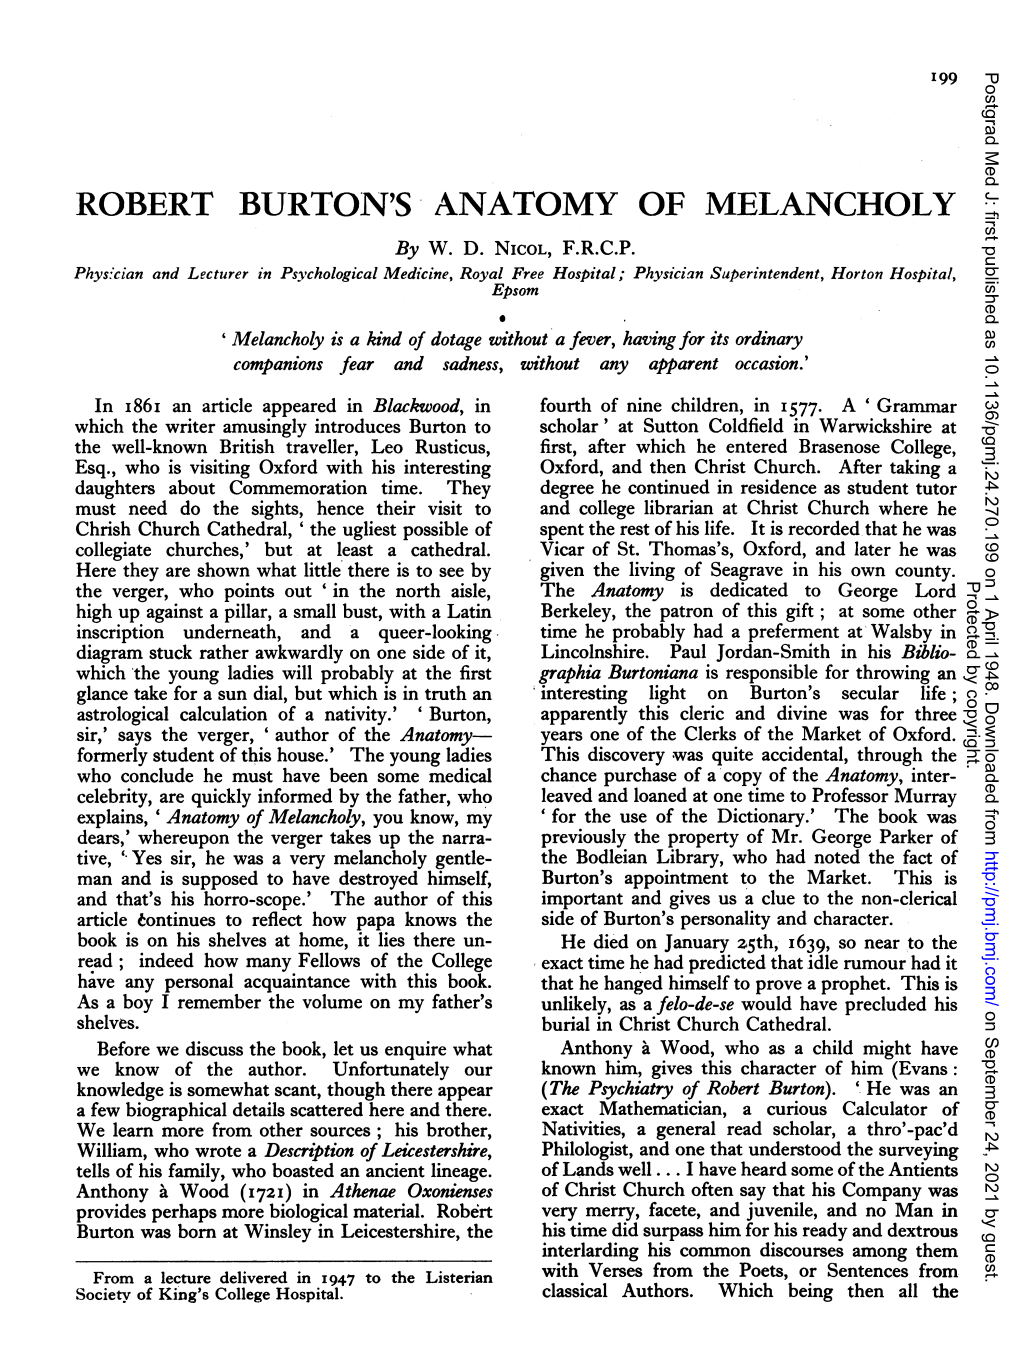 ROBERT BURTON's ANATOMY of MELANCHOLY by W